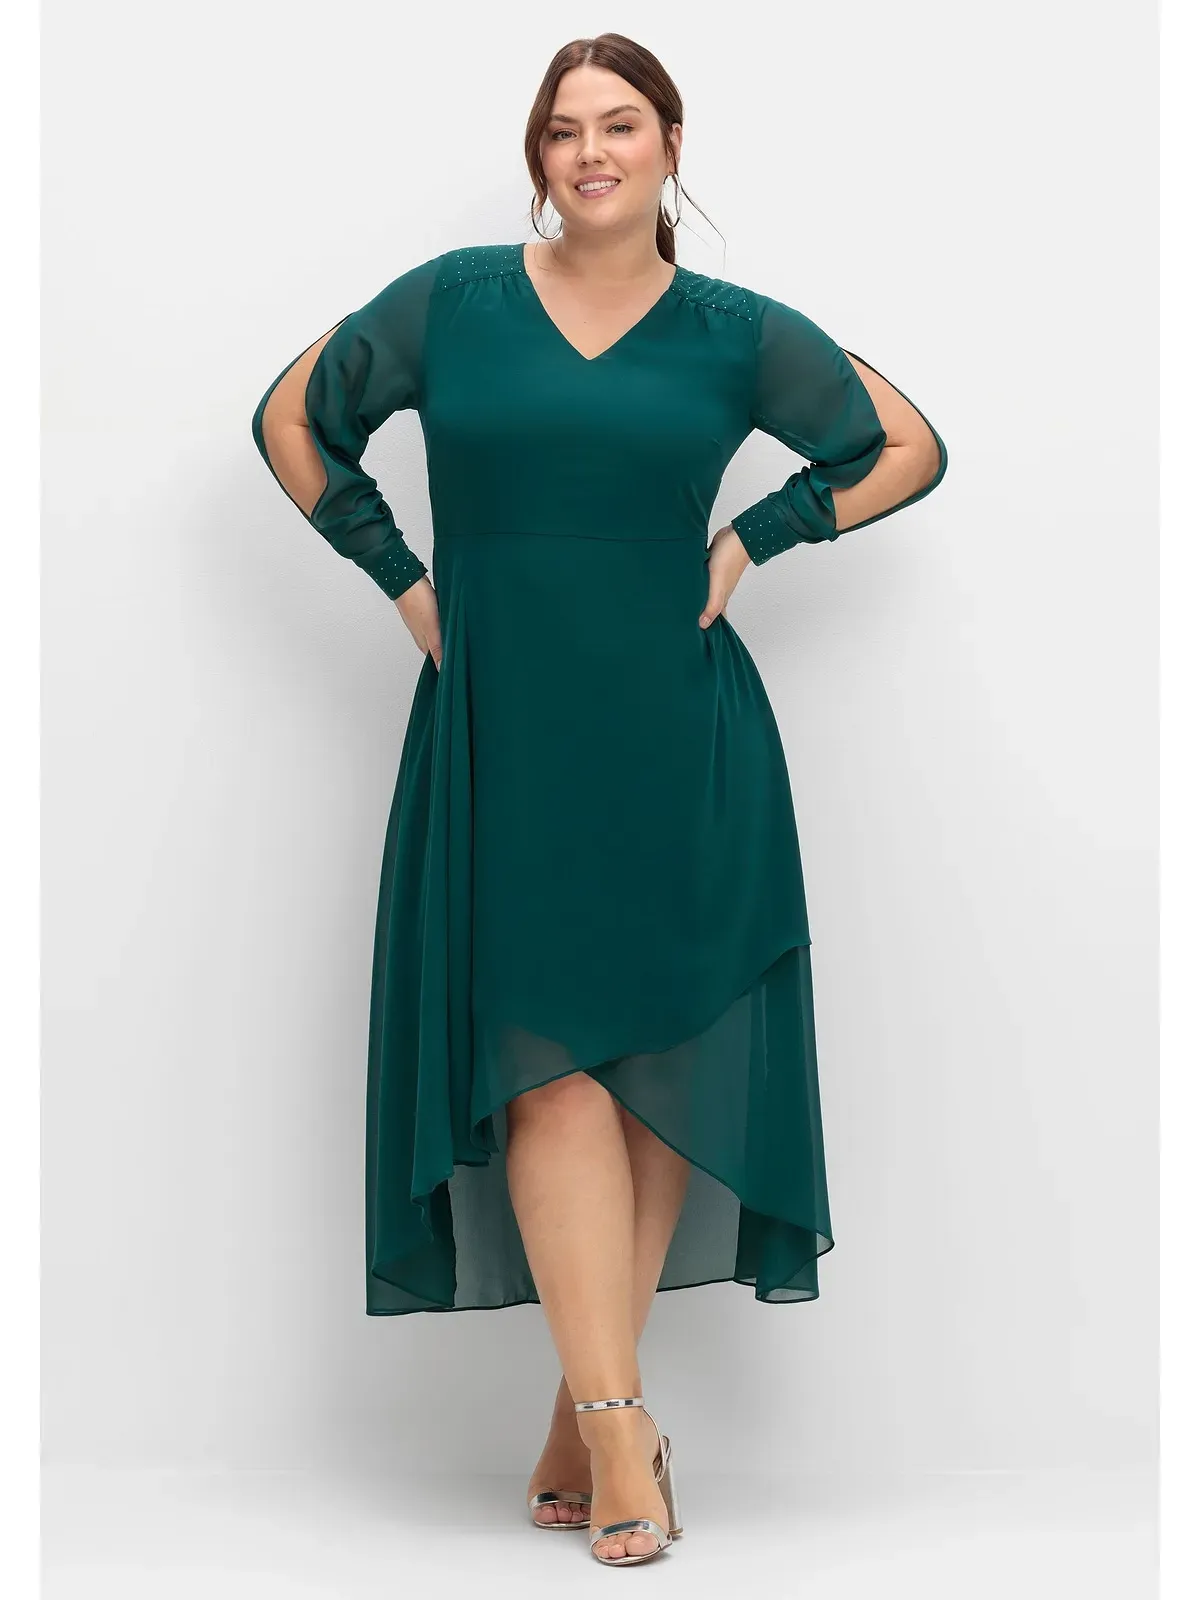 Abendkleid SHEEGO "Große Größen" Gr. 58, Normalgrößen, grün (dunkelgrün) Damen Kleider Langarm